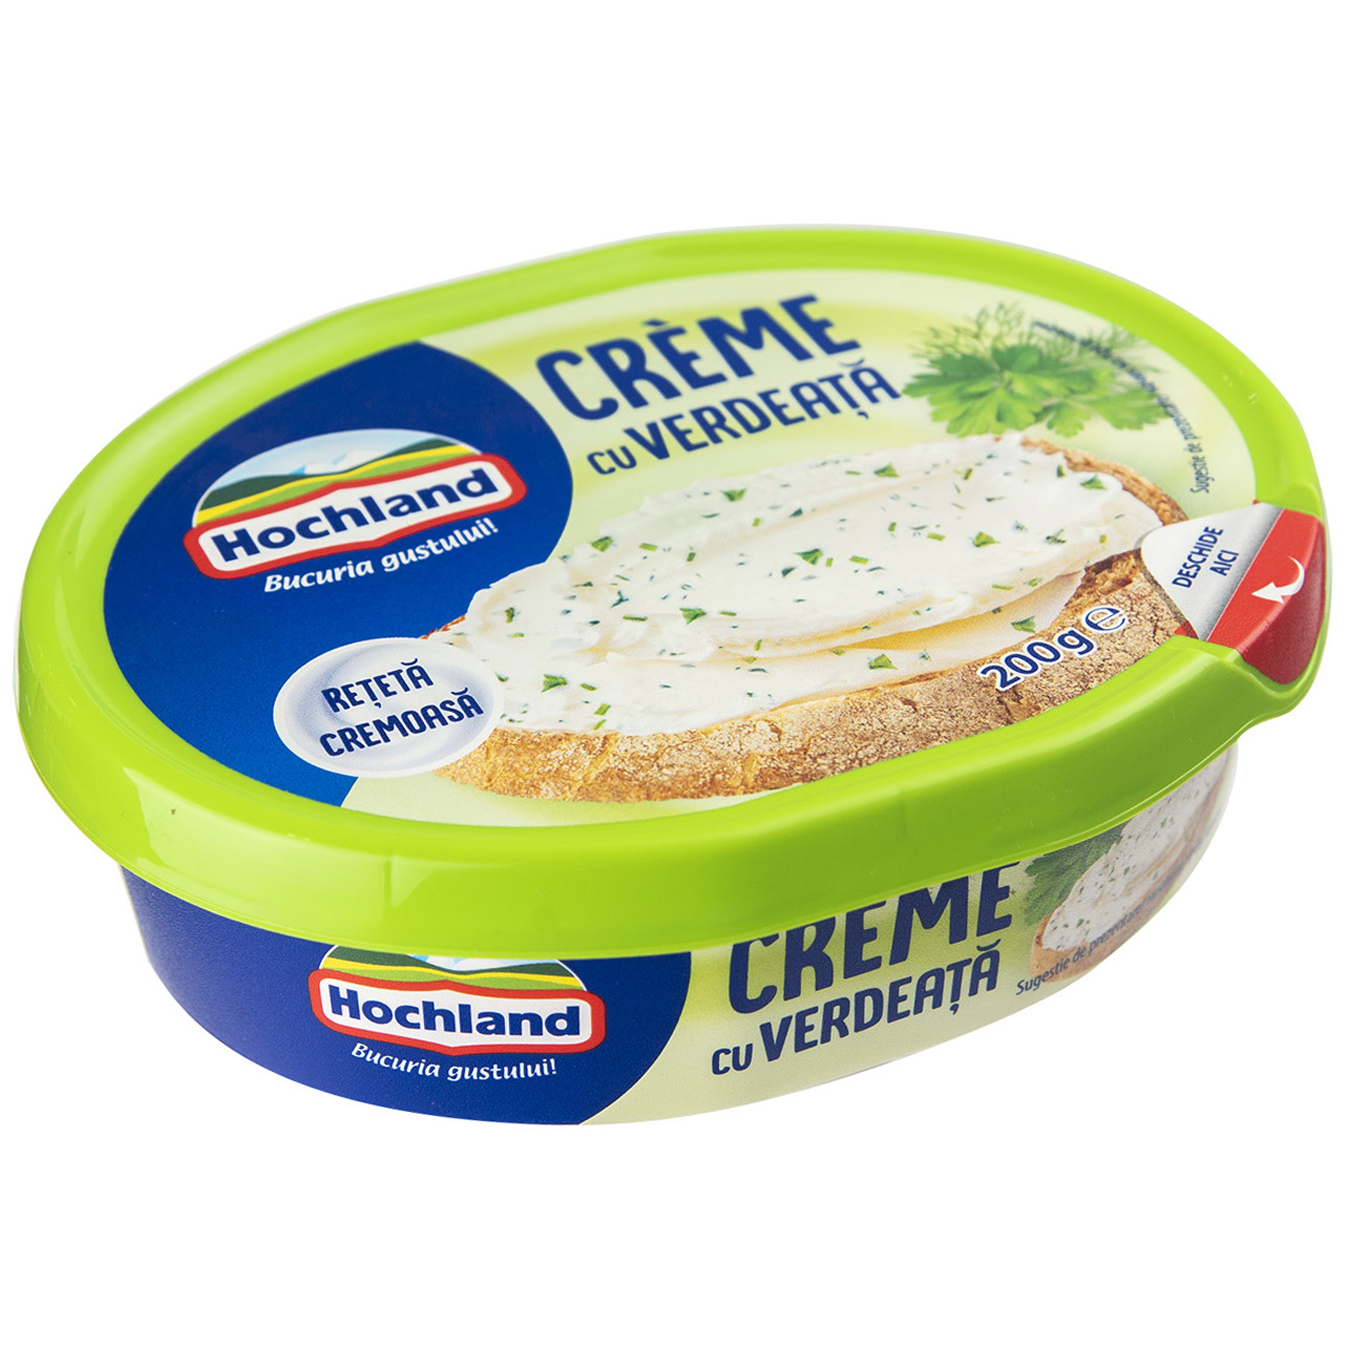 Hochland with herbs cream-cheese 200g